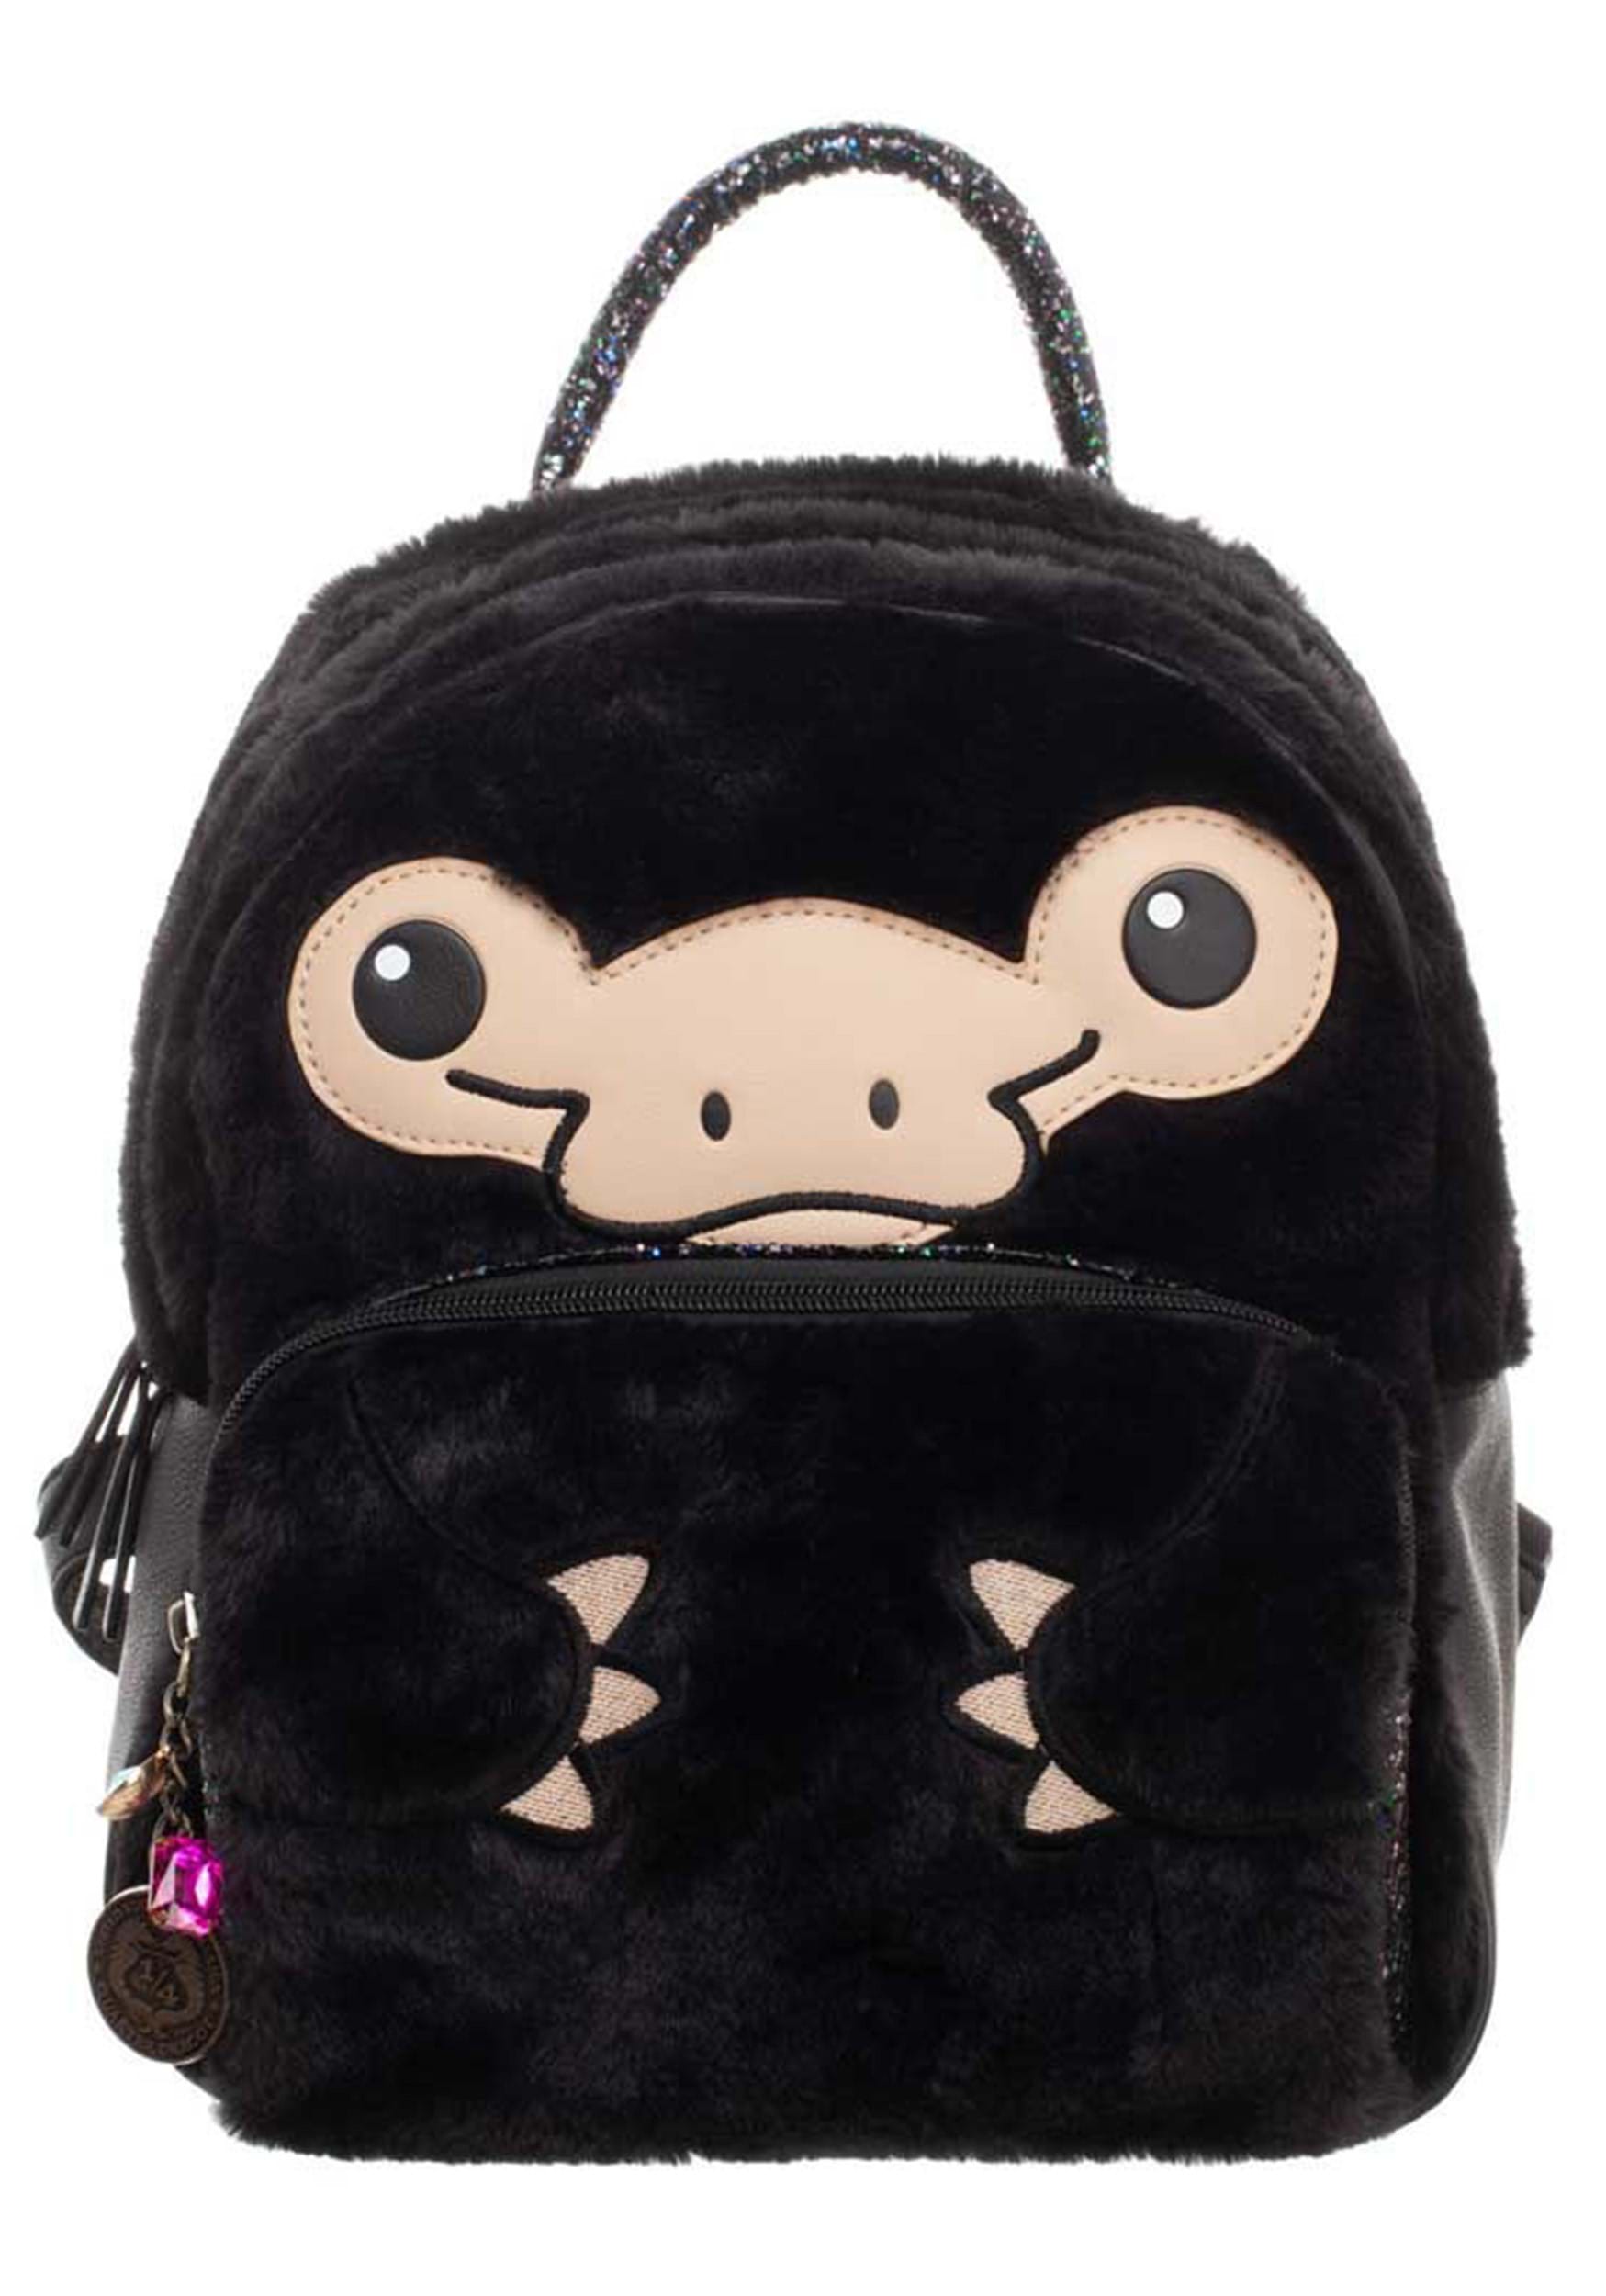 Fantastic Beasts Niffler Furry Mini Backpack